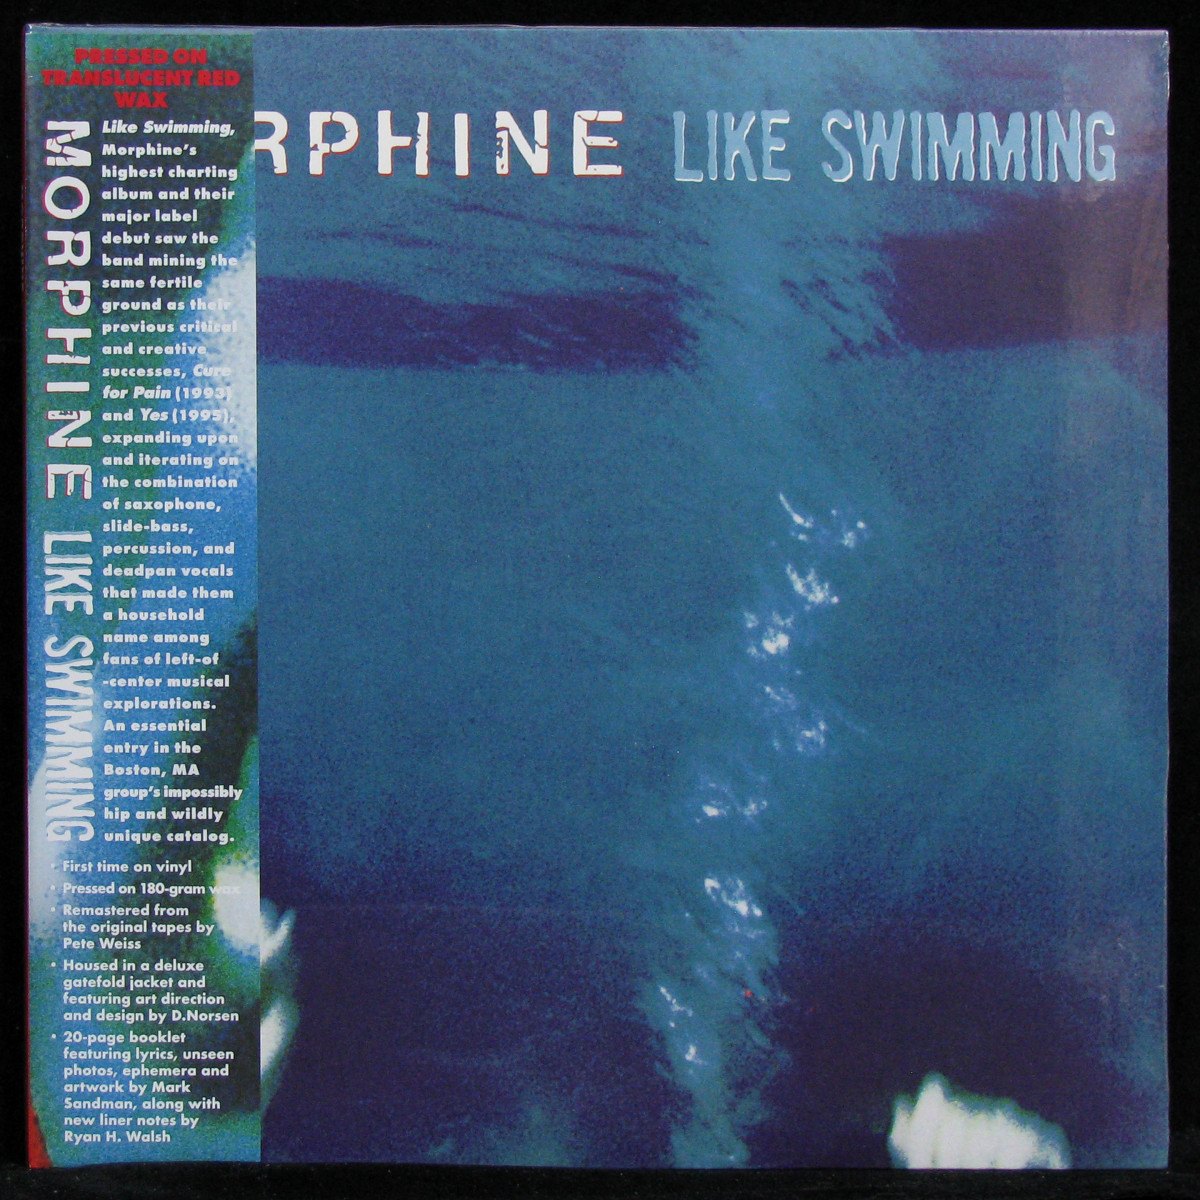 LP Morphine — Like Swimming (+ booklet, coloured vinyl, + obi) фото